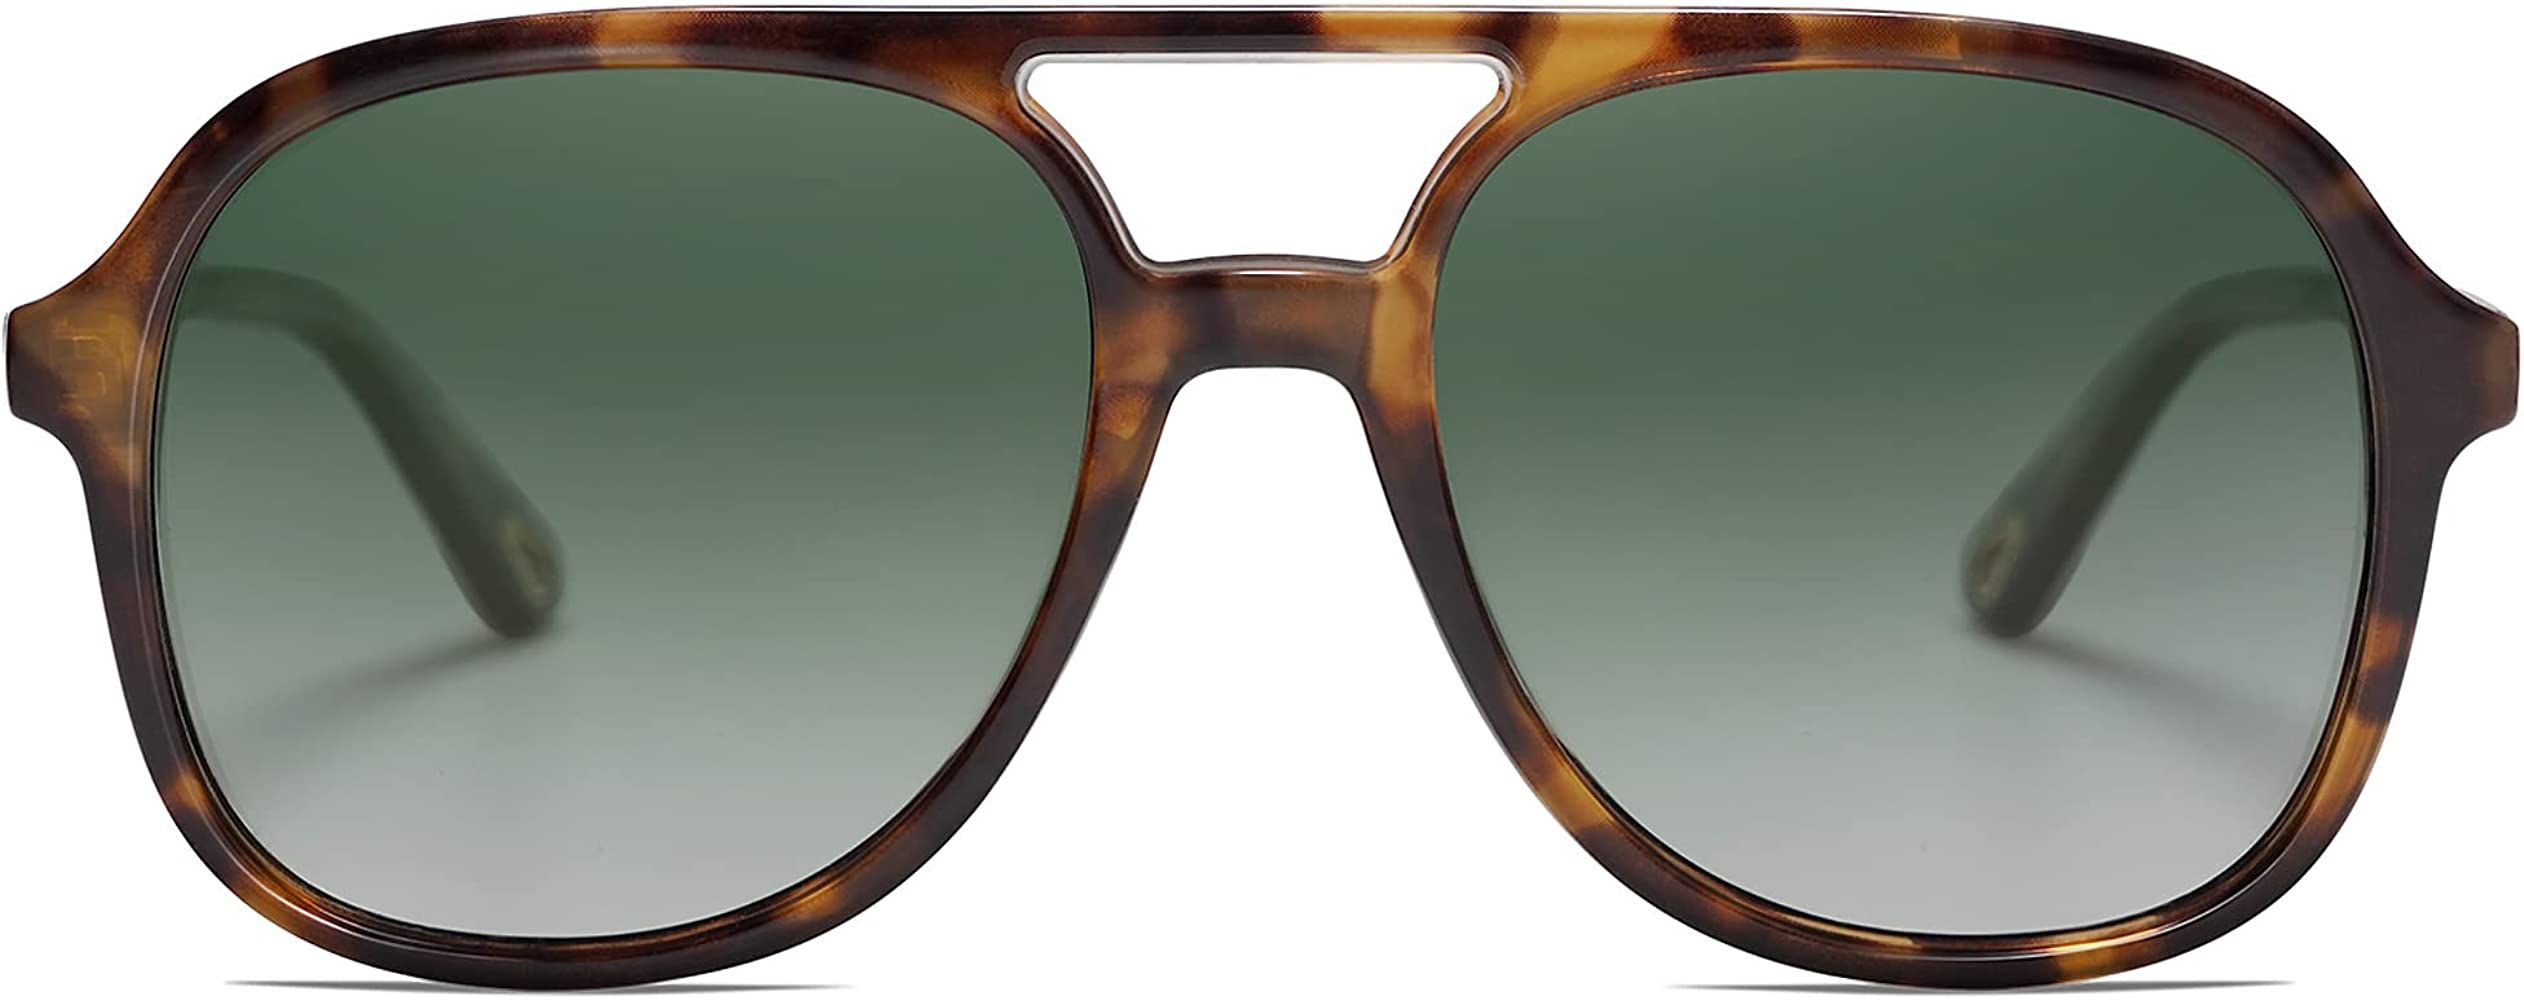 SOJOS Retro Square Polarized Sunglasses 70s Vintage Oversized Shades Double Bridge Sun Glasses SJ217 | Amazon (US)